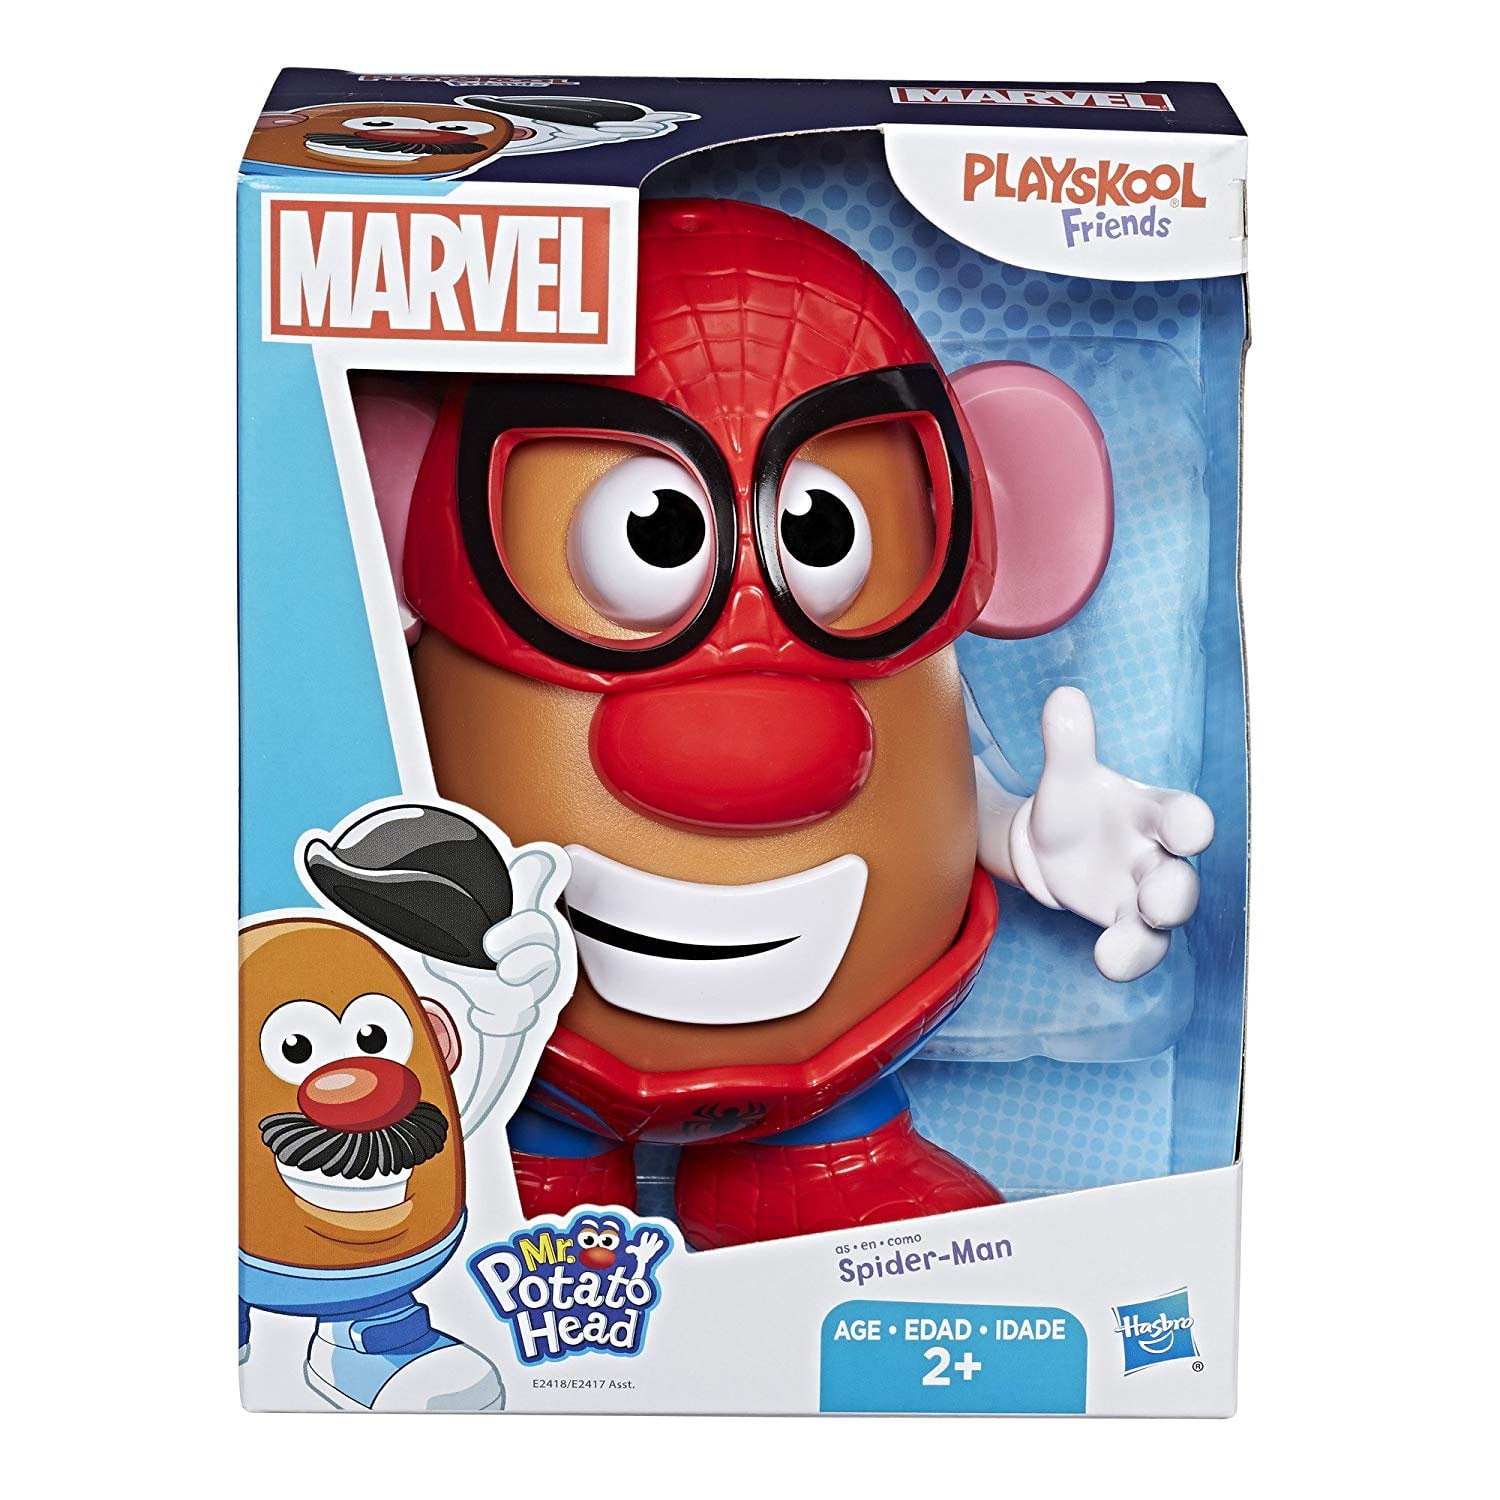 Potato Head as Spider-Man vs C2451 Iron Man Figures for sale online Playskool Mr 